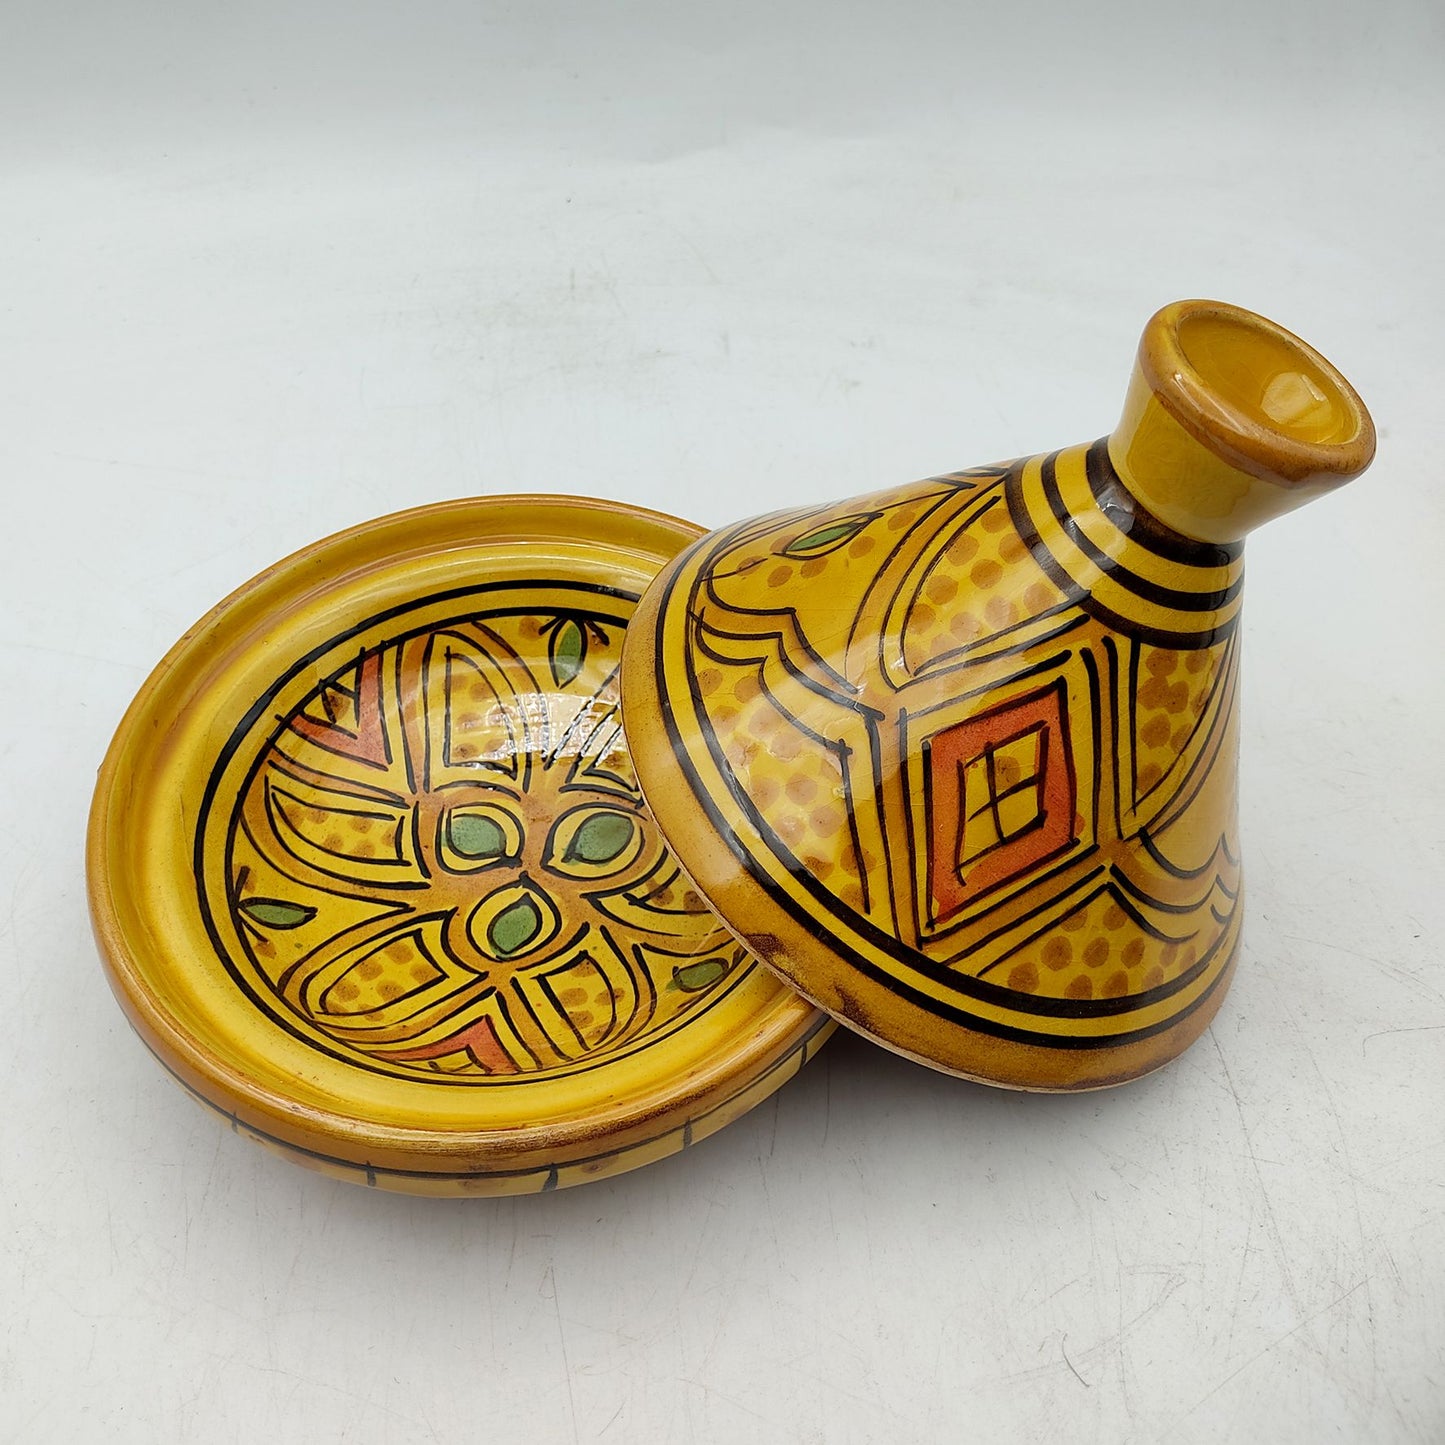 Mini Tajine Etnica Marocco Marocchina Spezie Salse Ceramica Terracotta 1702221415